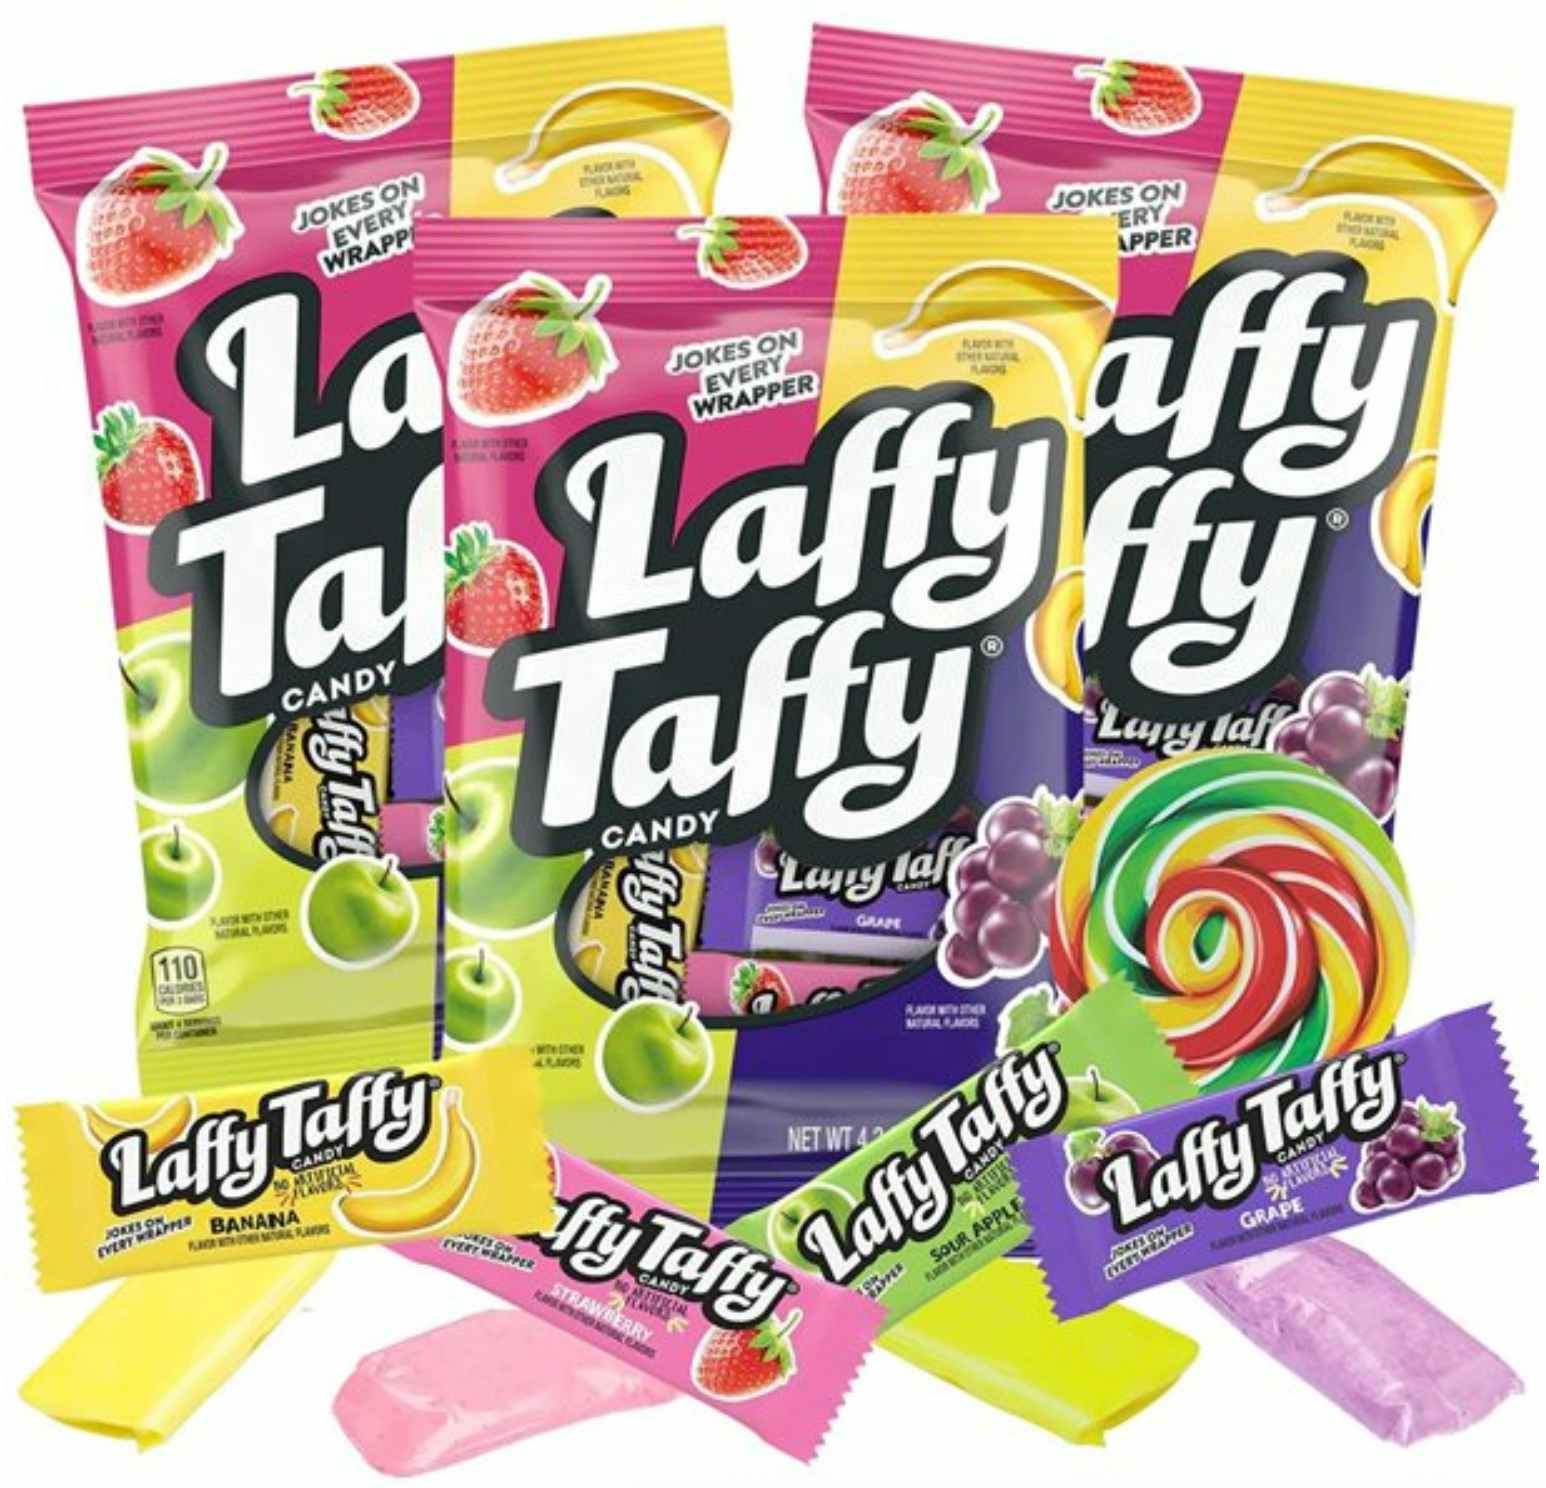 Laffy taffy candies